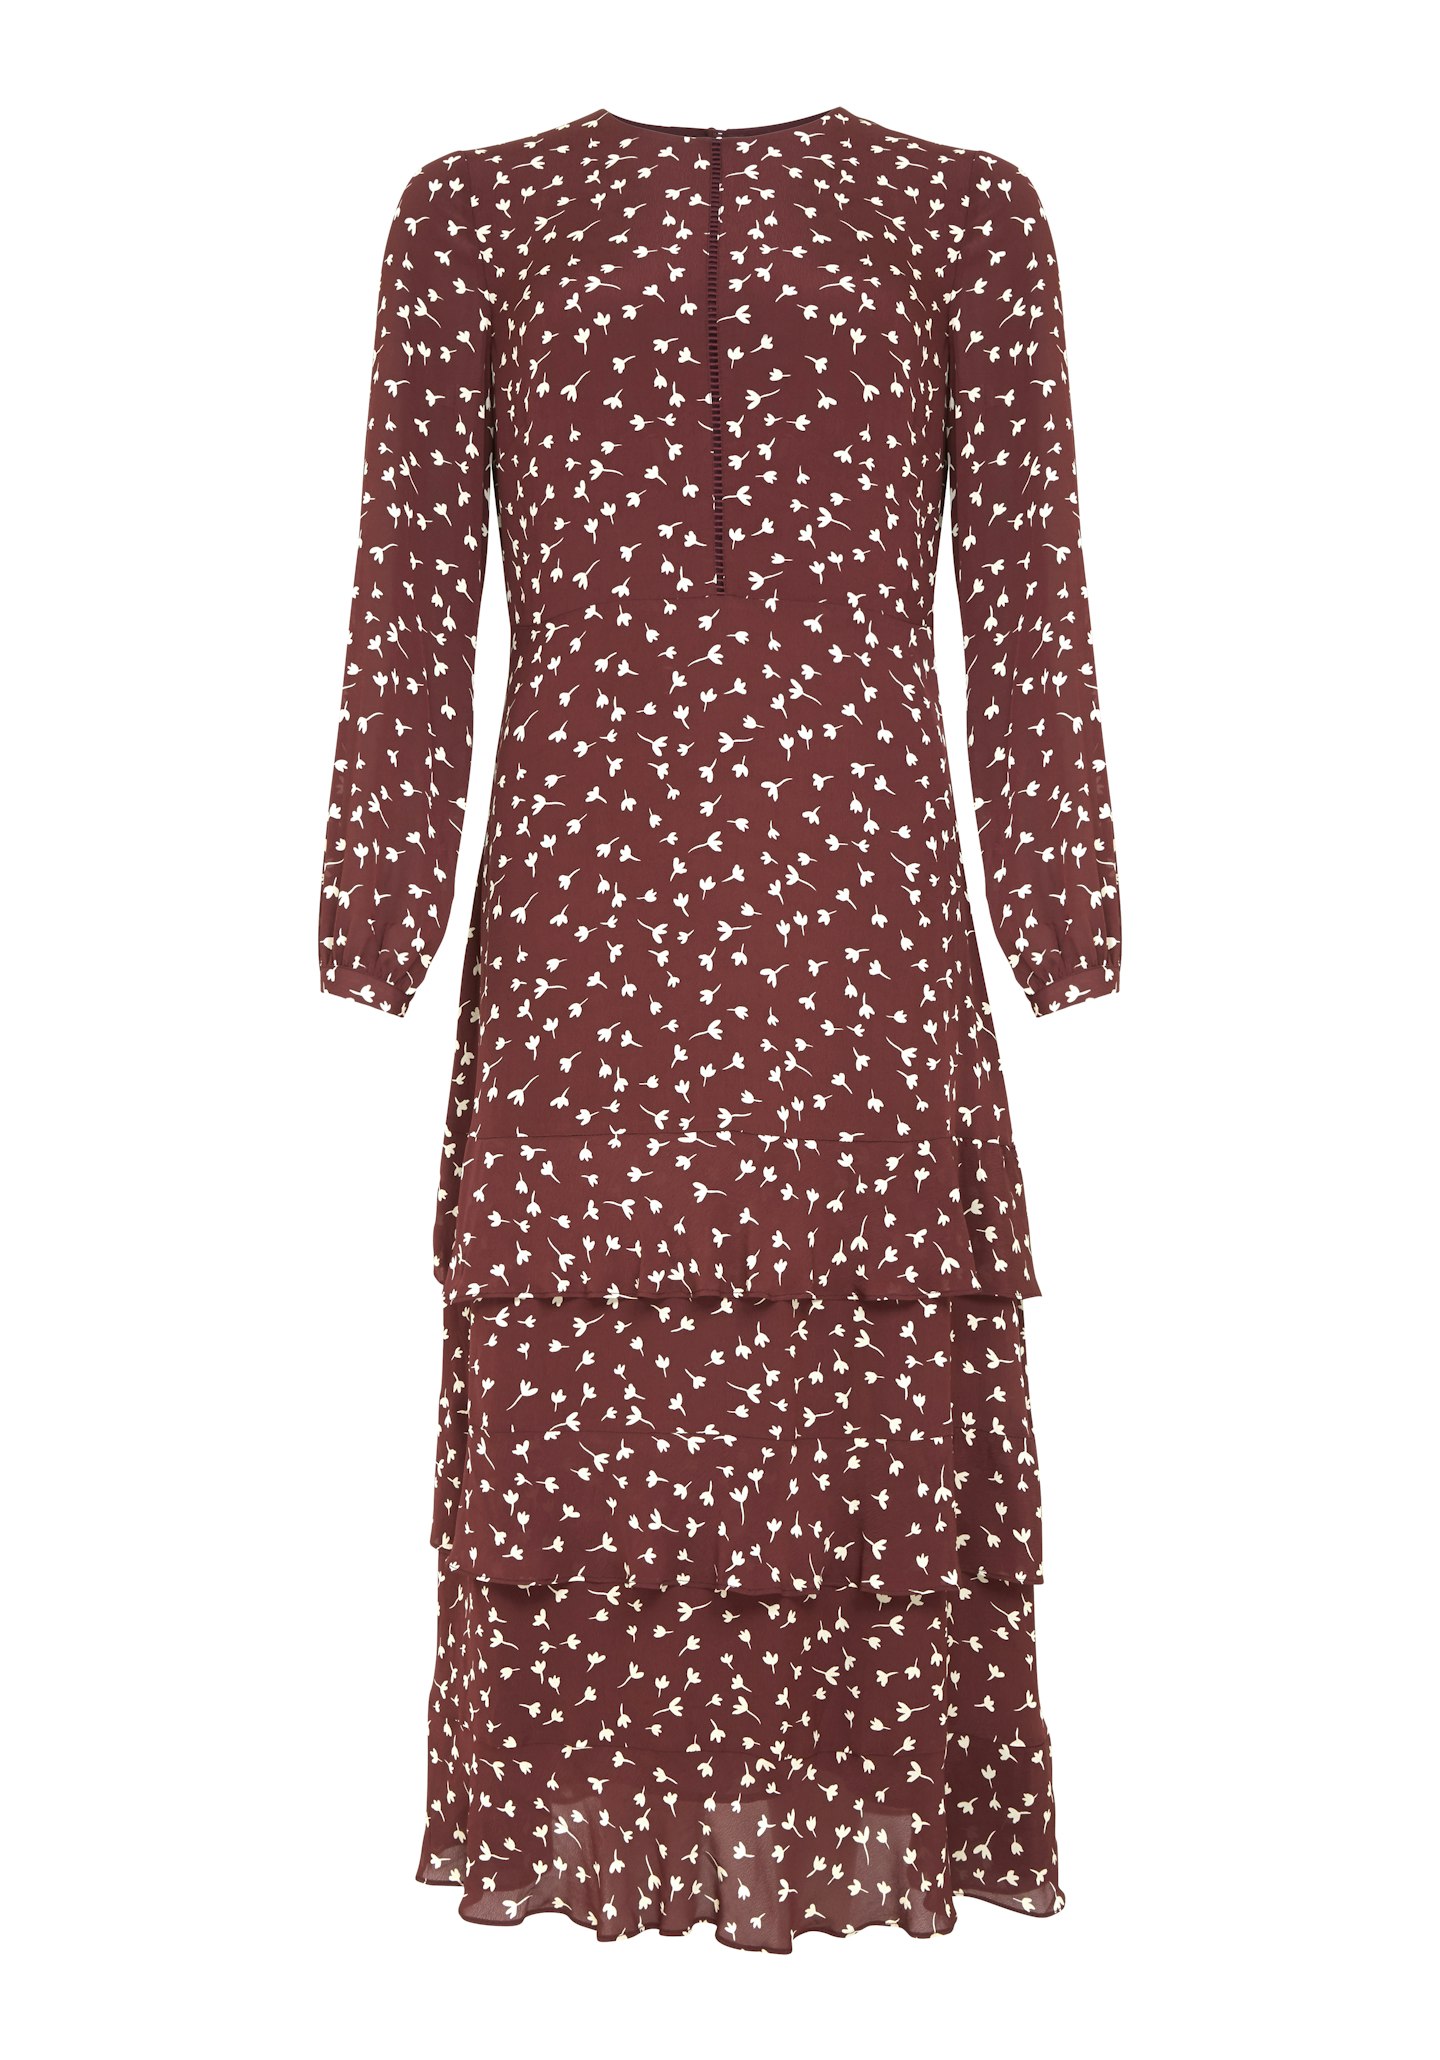 Tiered Petals Dress, £110